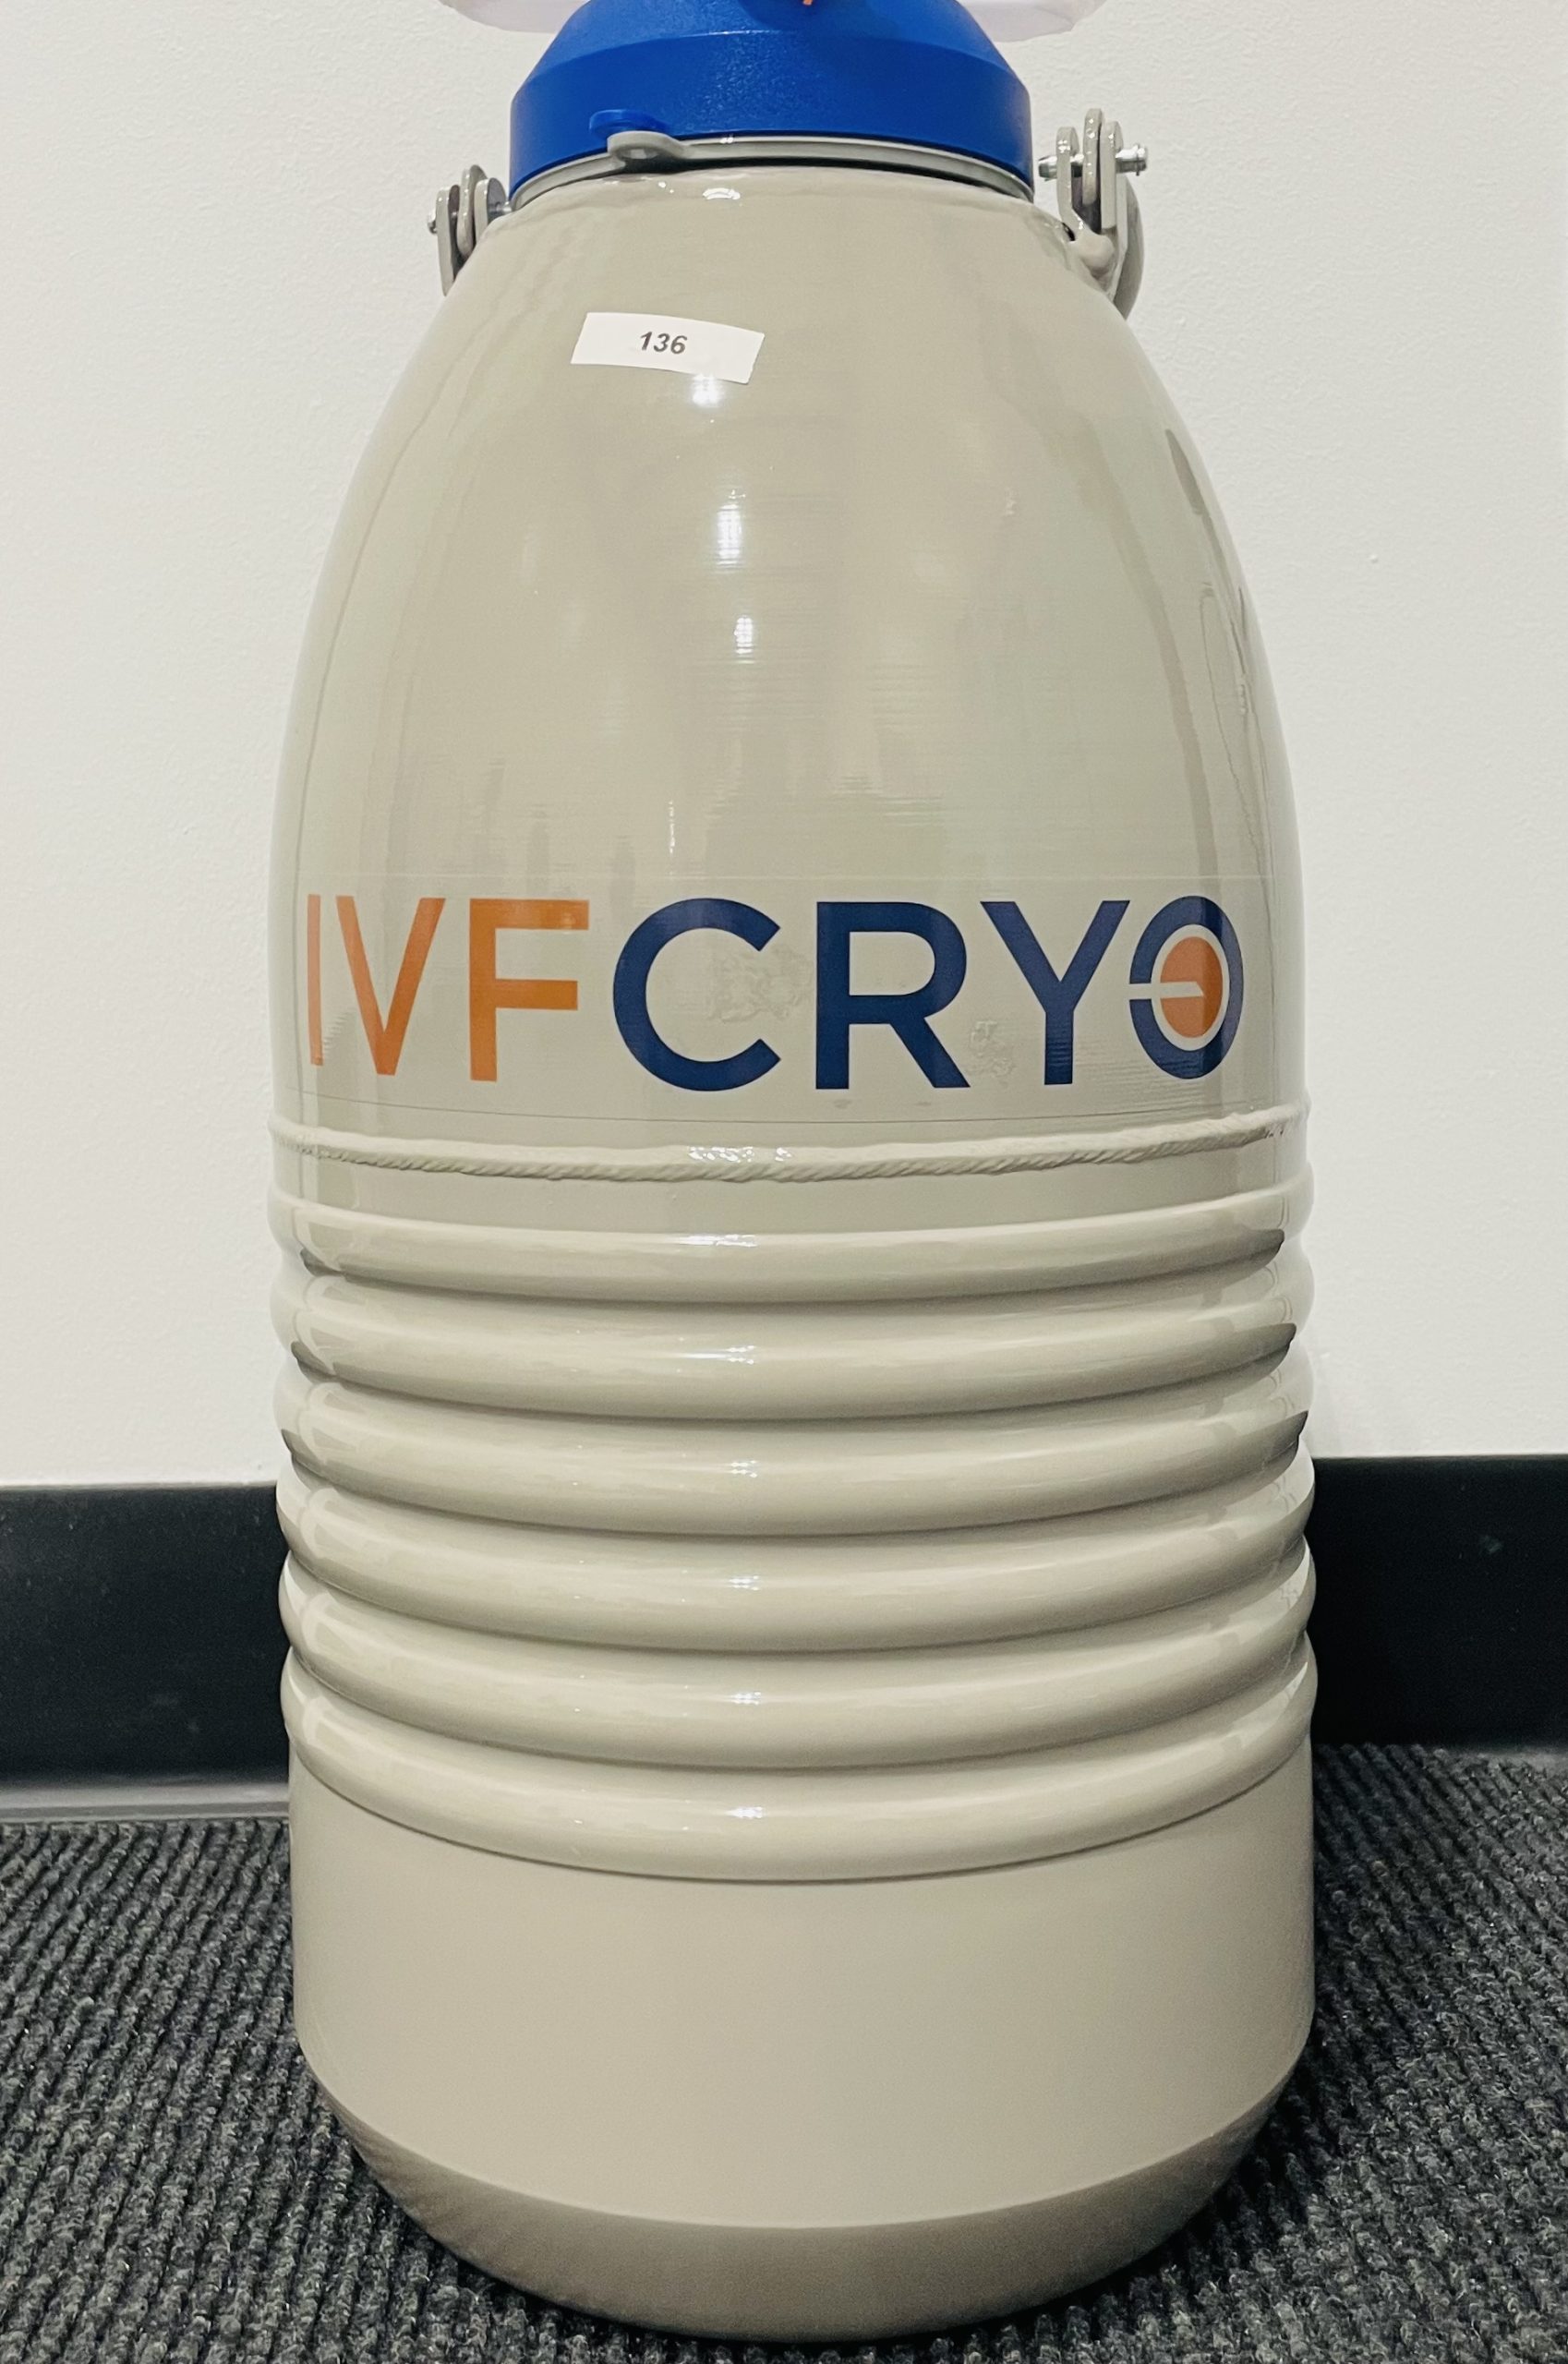 IVF CRYO’s Medium Shipper